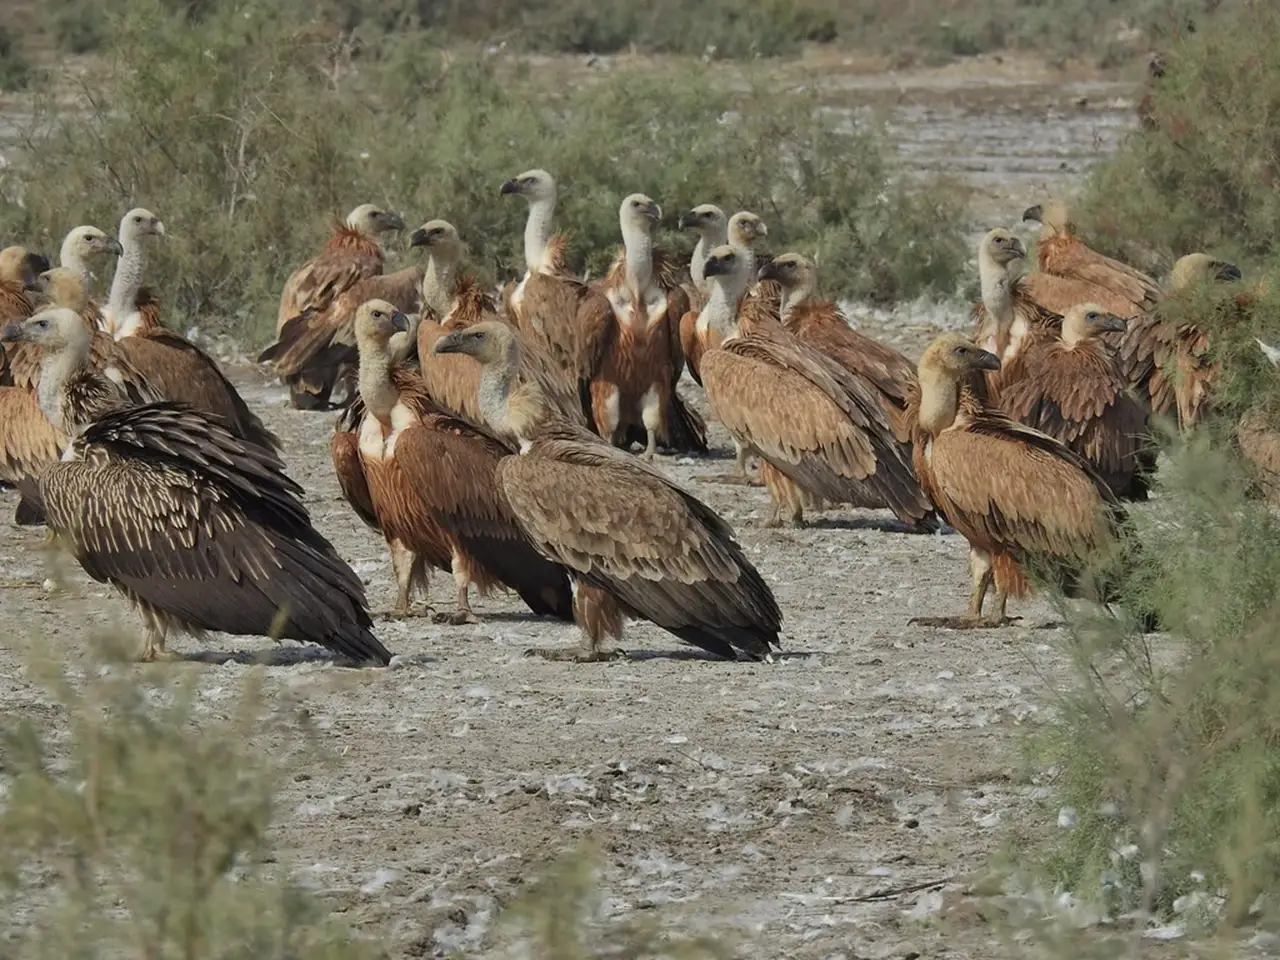 Vultures in Panna Tiger Reserve of Madhya Pradesh